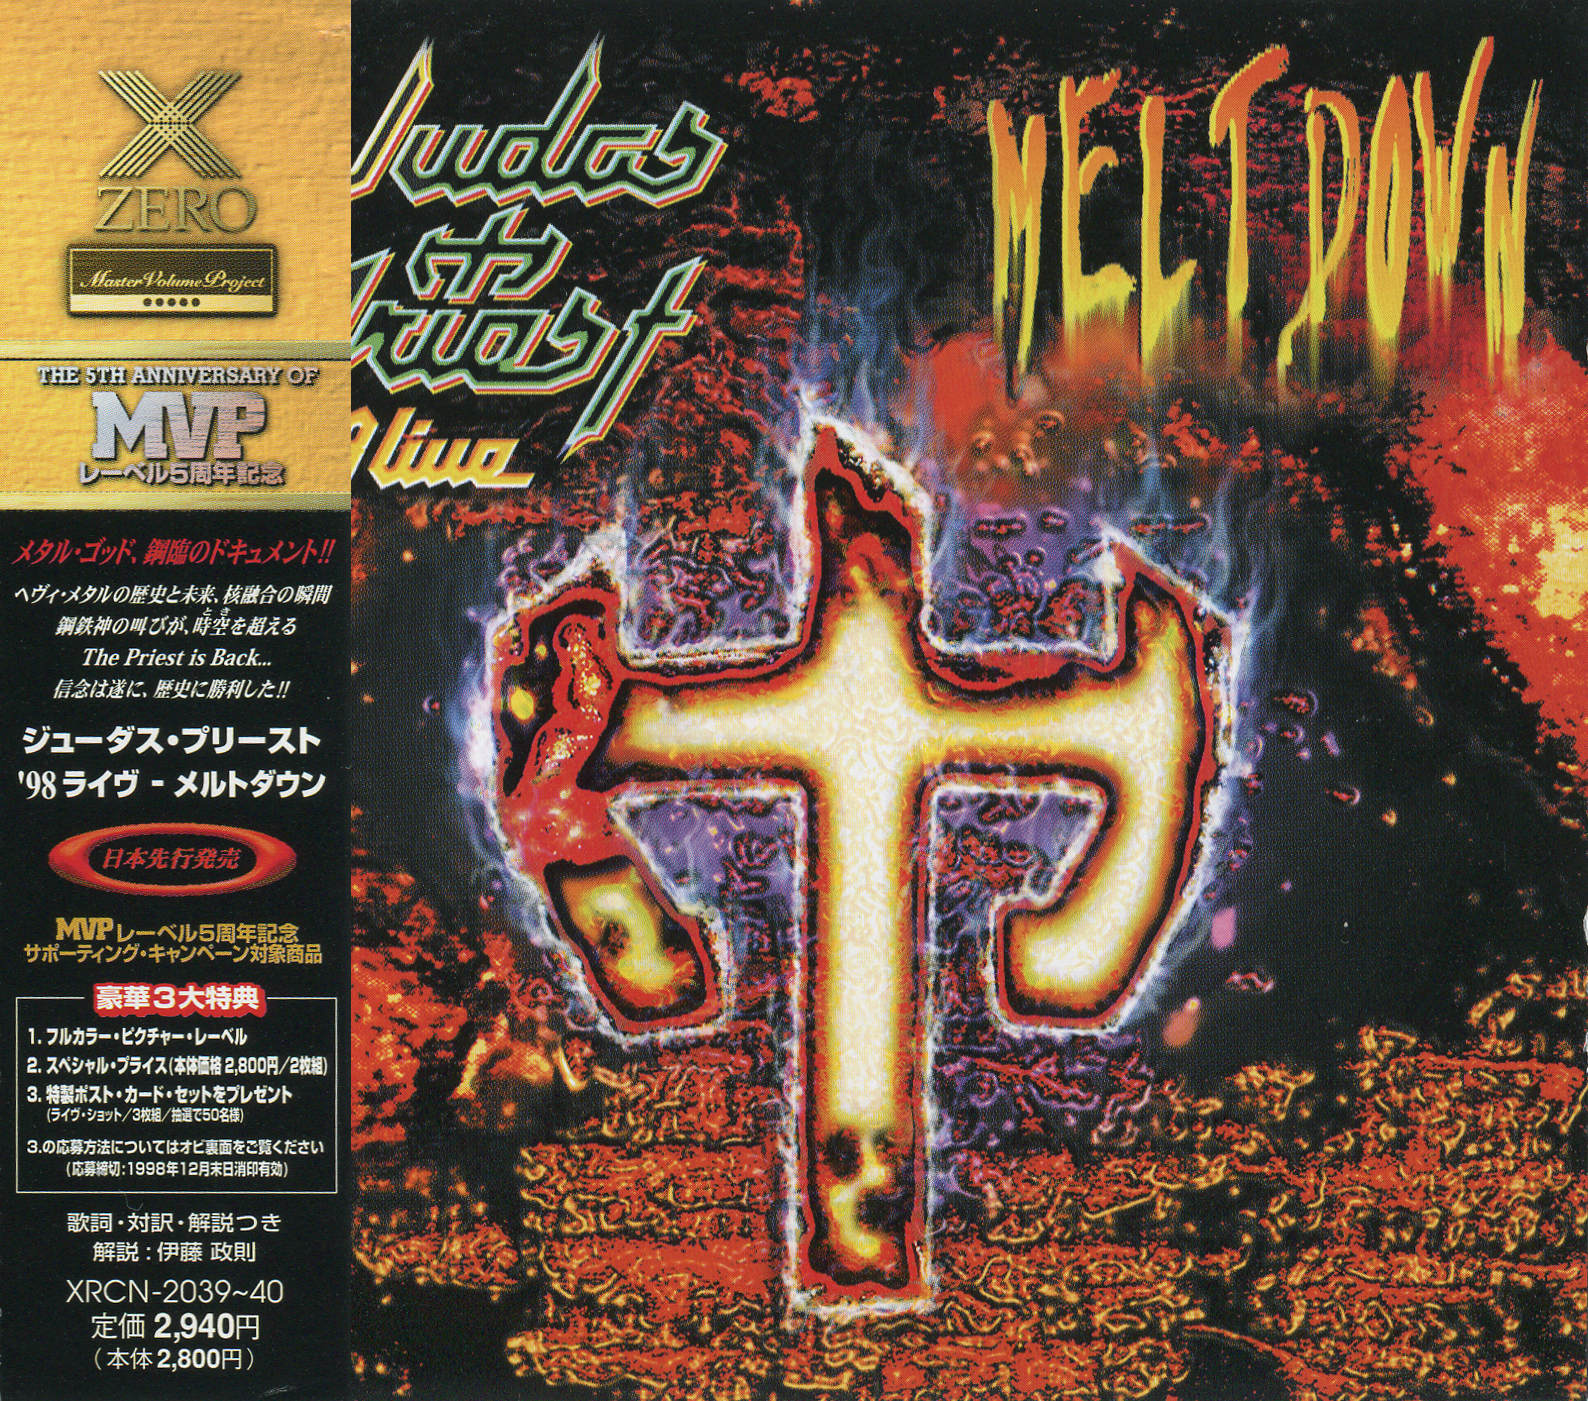 Judas Priest Discography 320kbps Download